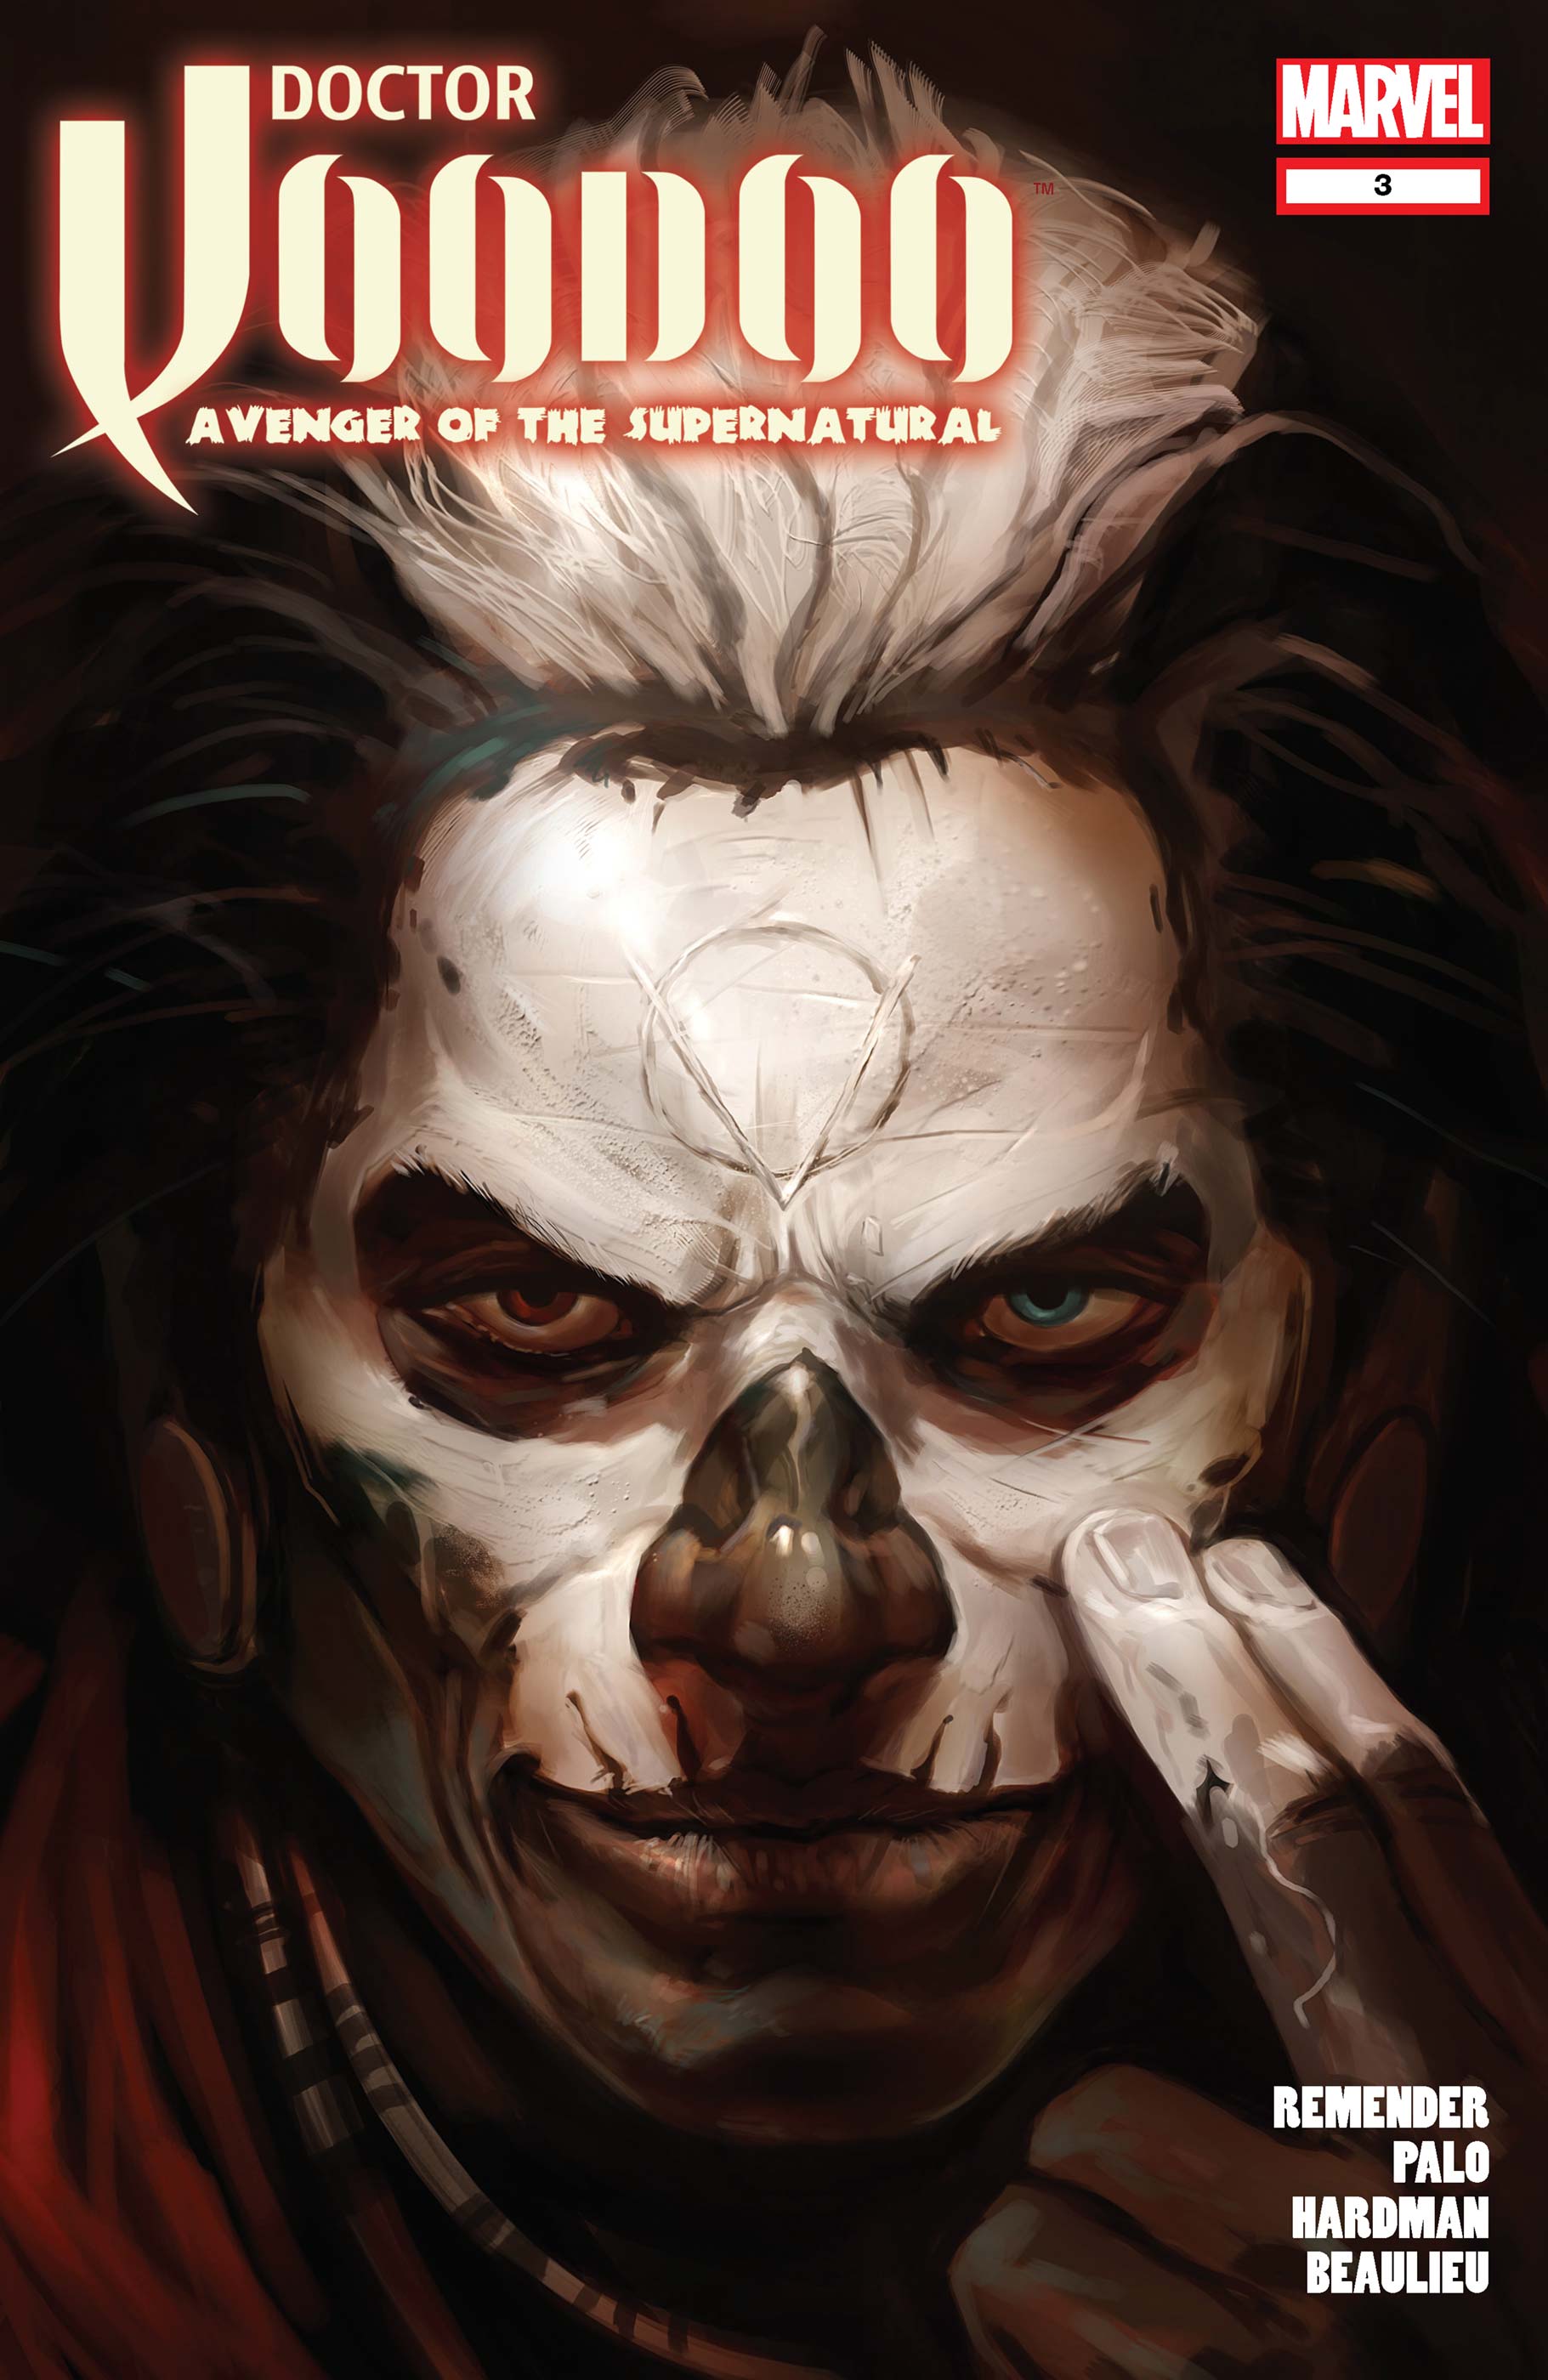 Doctor Voodoo: Avenger of the Supernatural (2009) #3